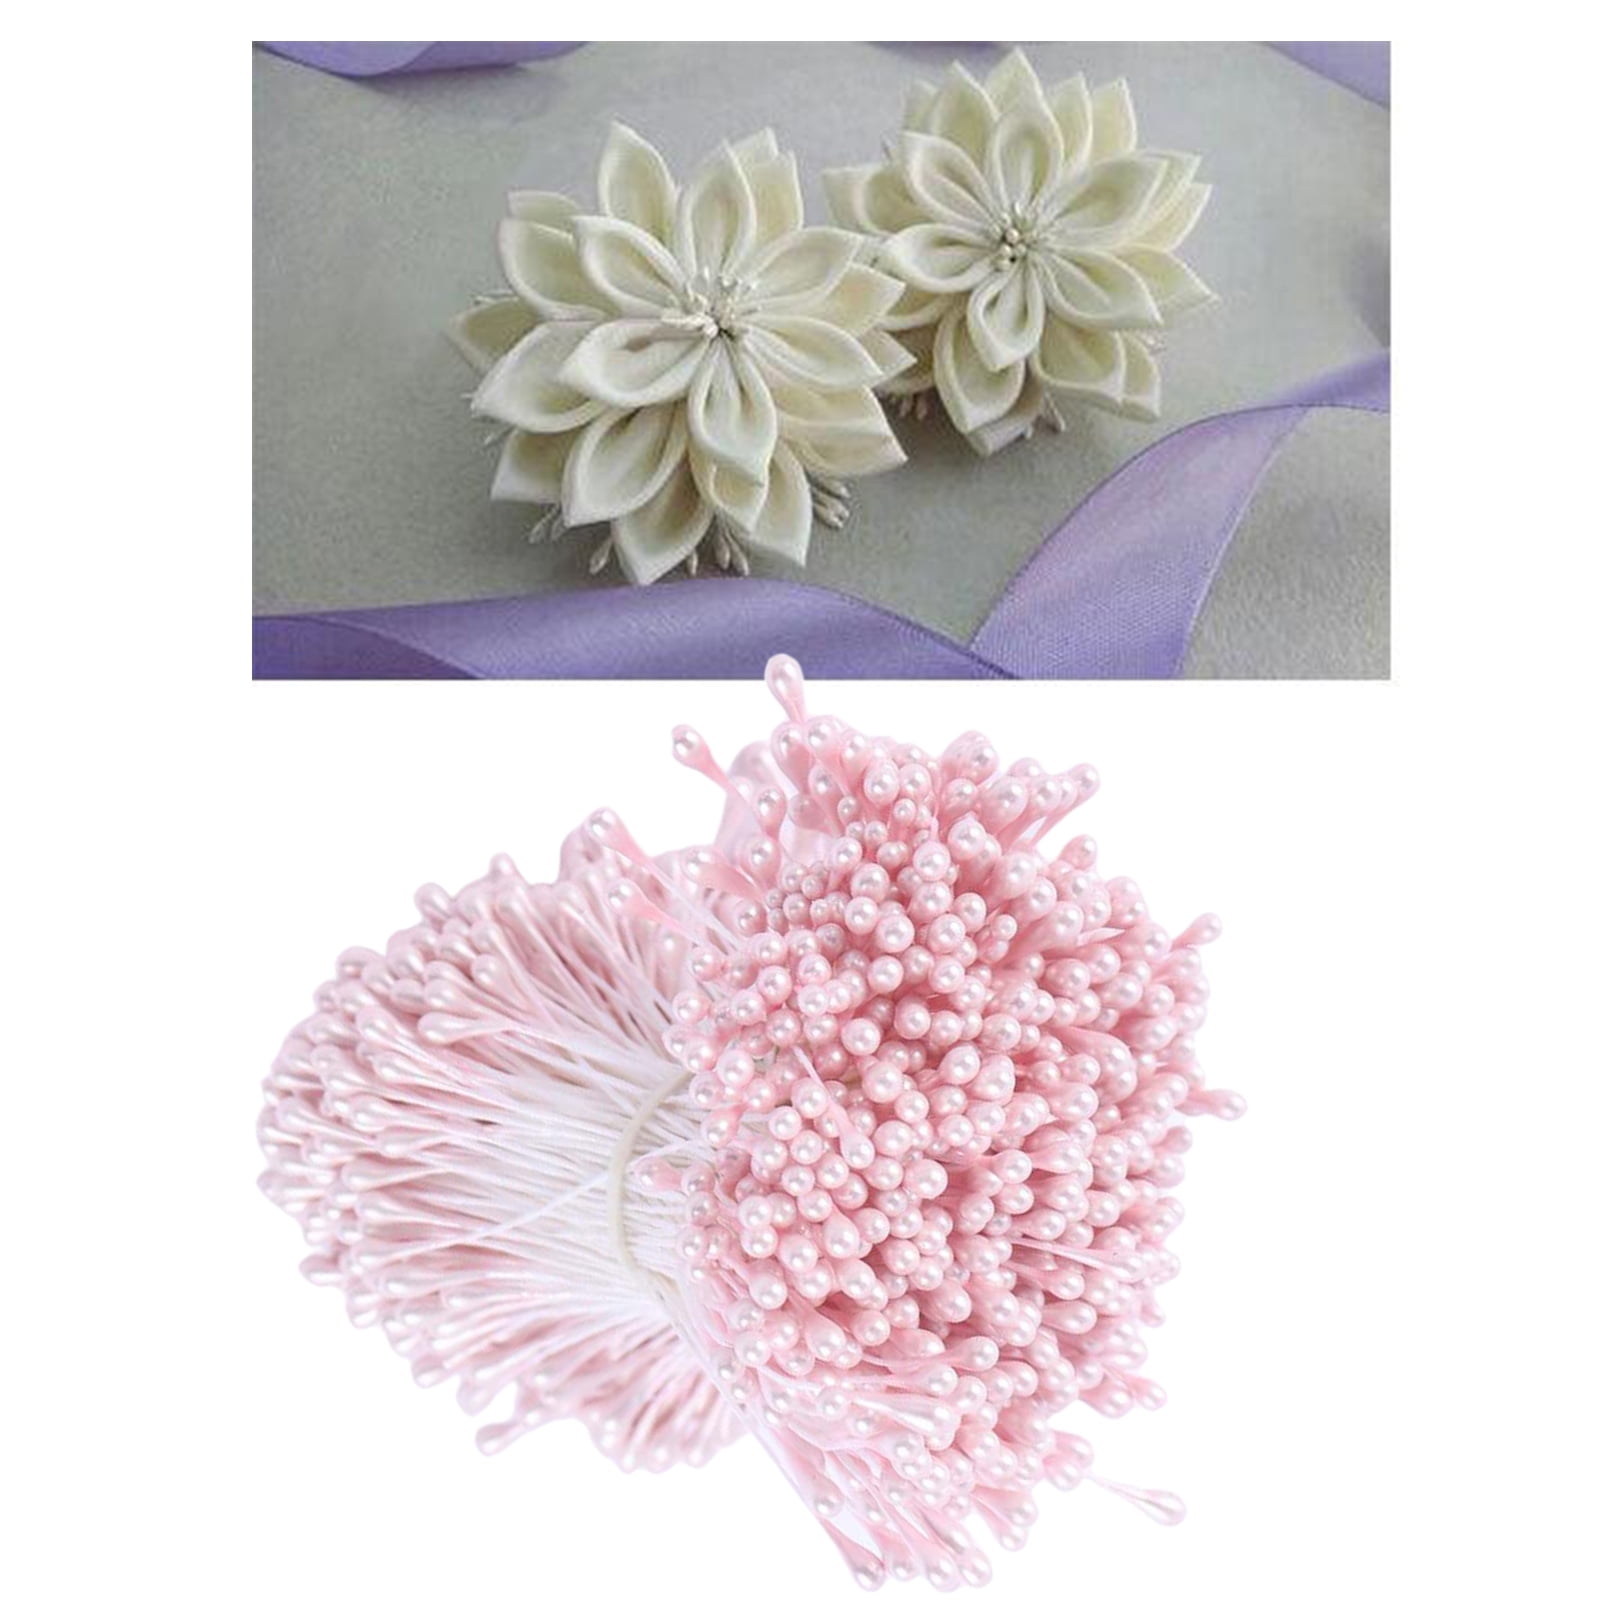 Jewelry Accessory Simulation Flower Bud Stamens Cake Decor Craft Supplies 